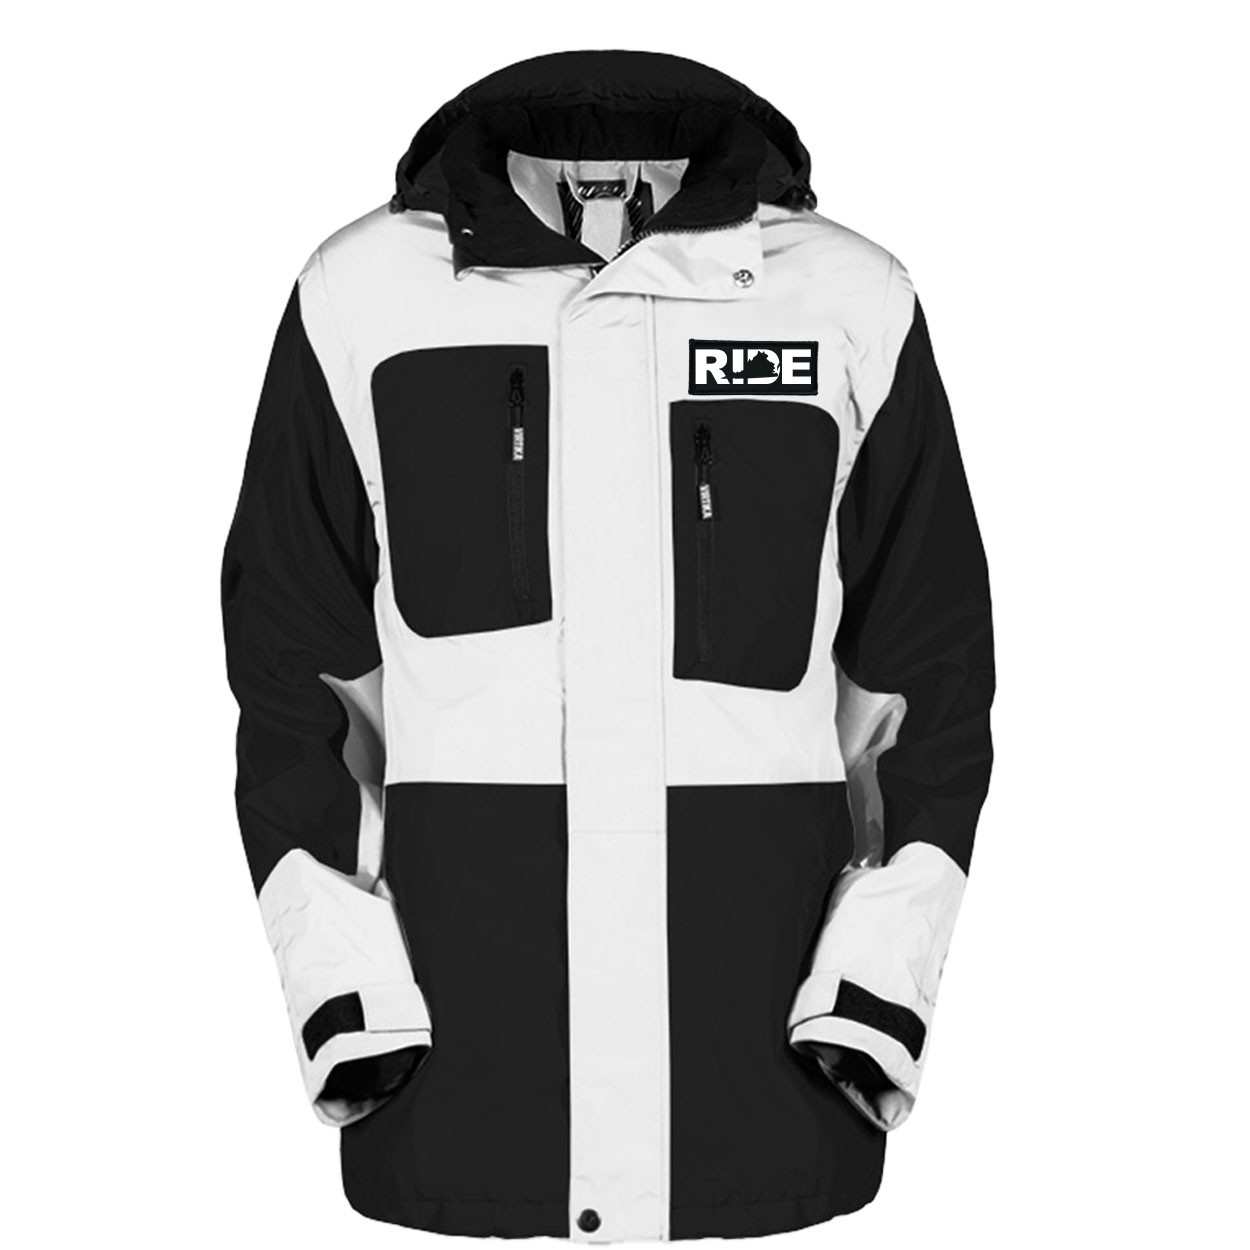 Ride Virginia Pro Waterproof Breathable Winter Virtika Jacket Black/White (White Logo)